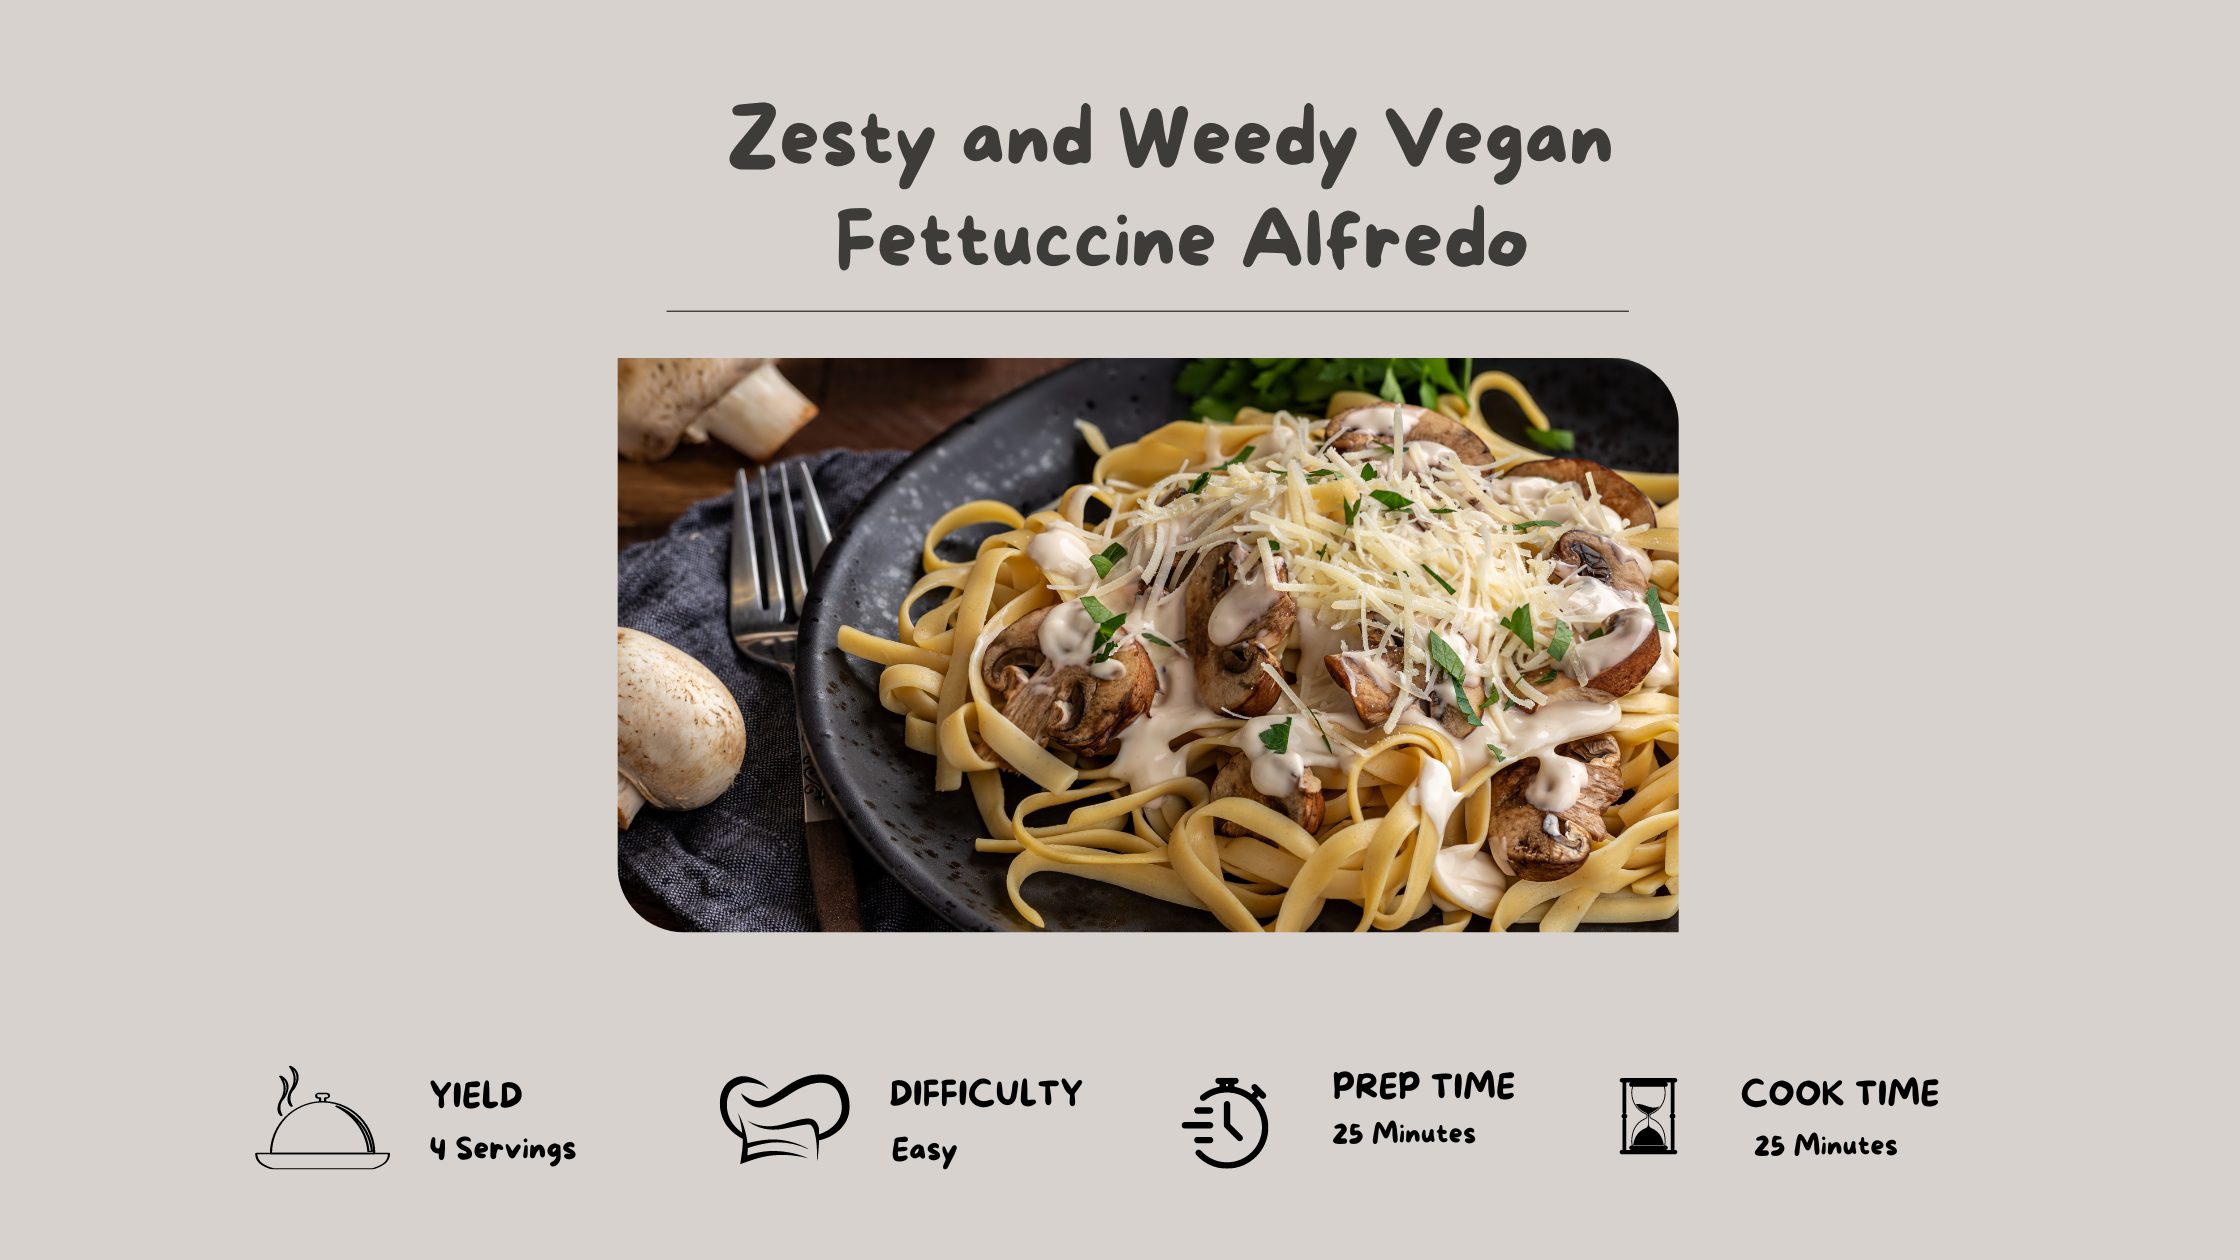 Zesty and Weedy Vegan Fettuccine Alfredo